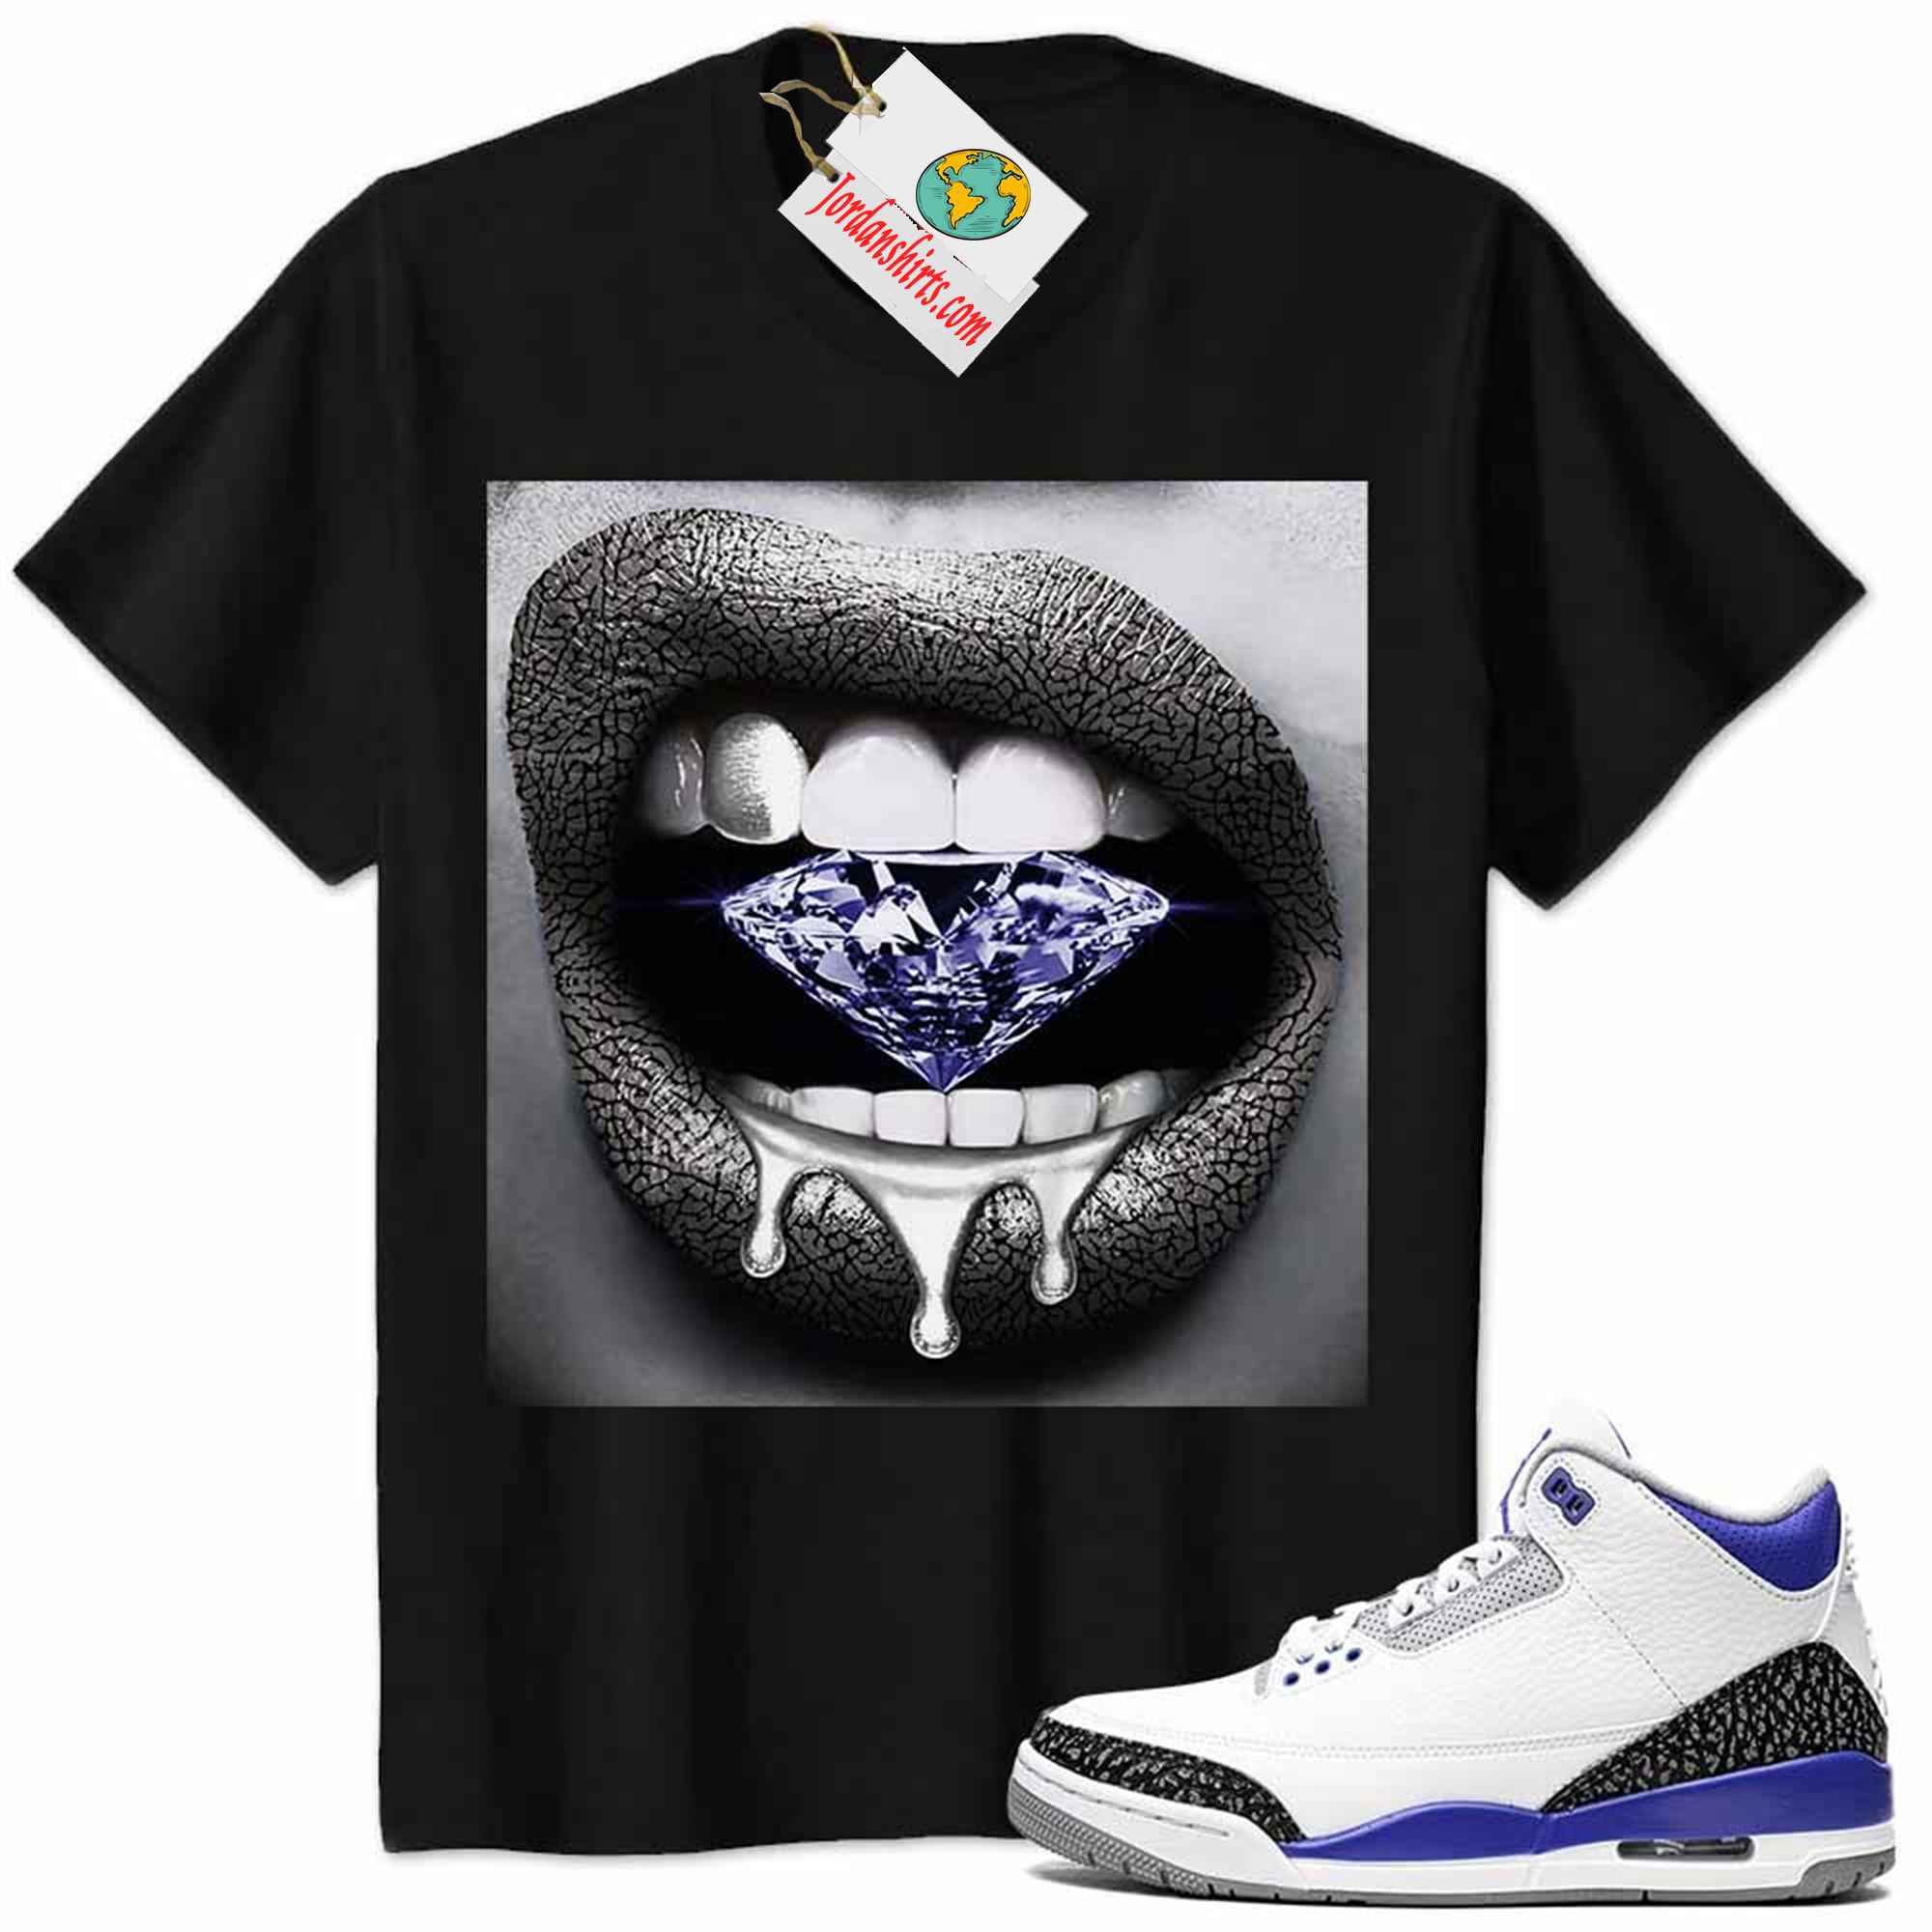 Jordan 3 Shirt, Jordan 3 Racer Blue Shirt Sexy Lip Bite Diamond Dripping Black Full Size Up To 5xl